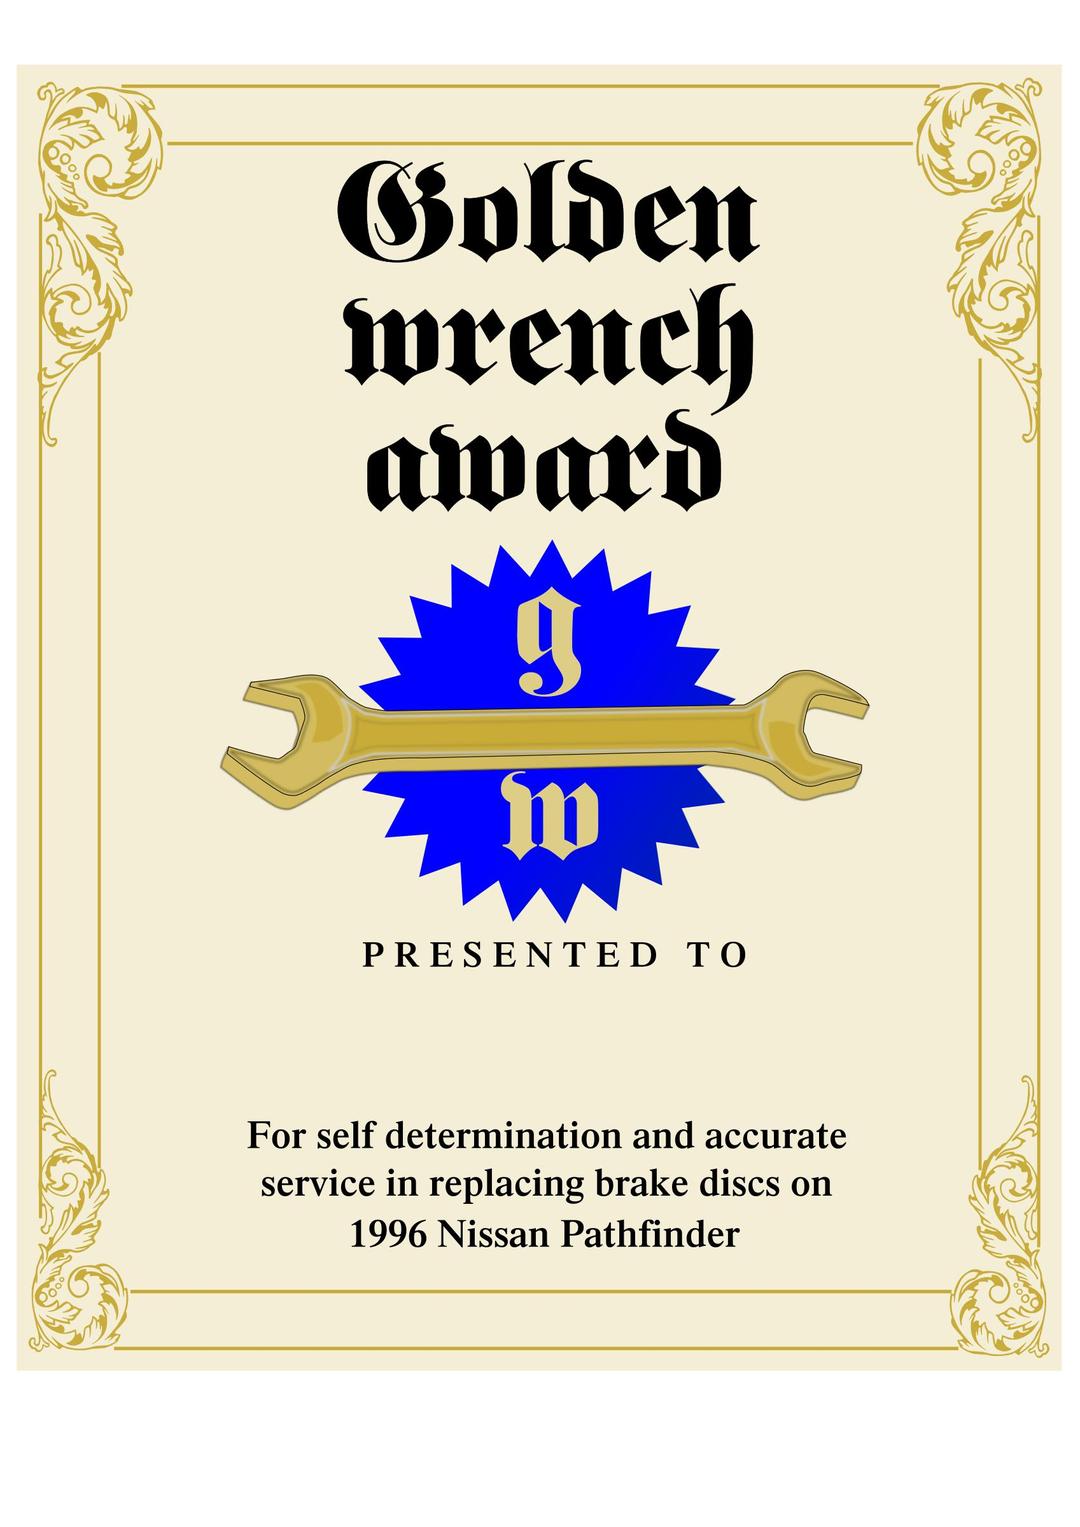 Golden Wrench Award png transparent